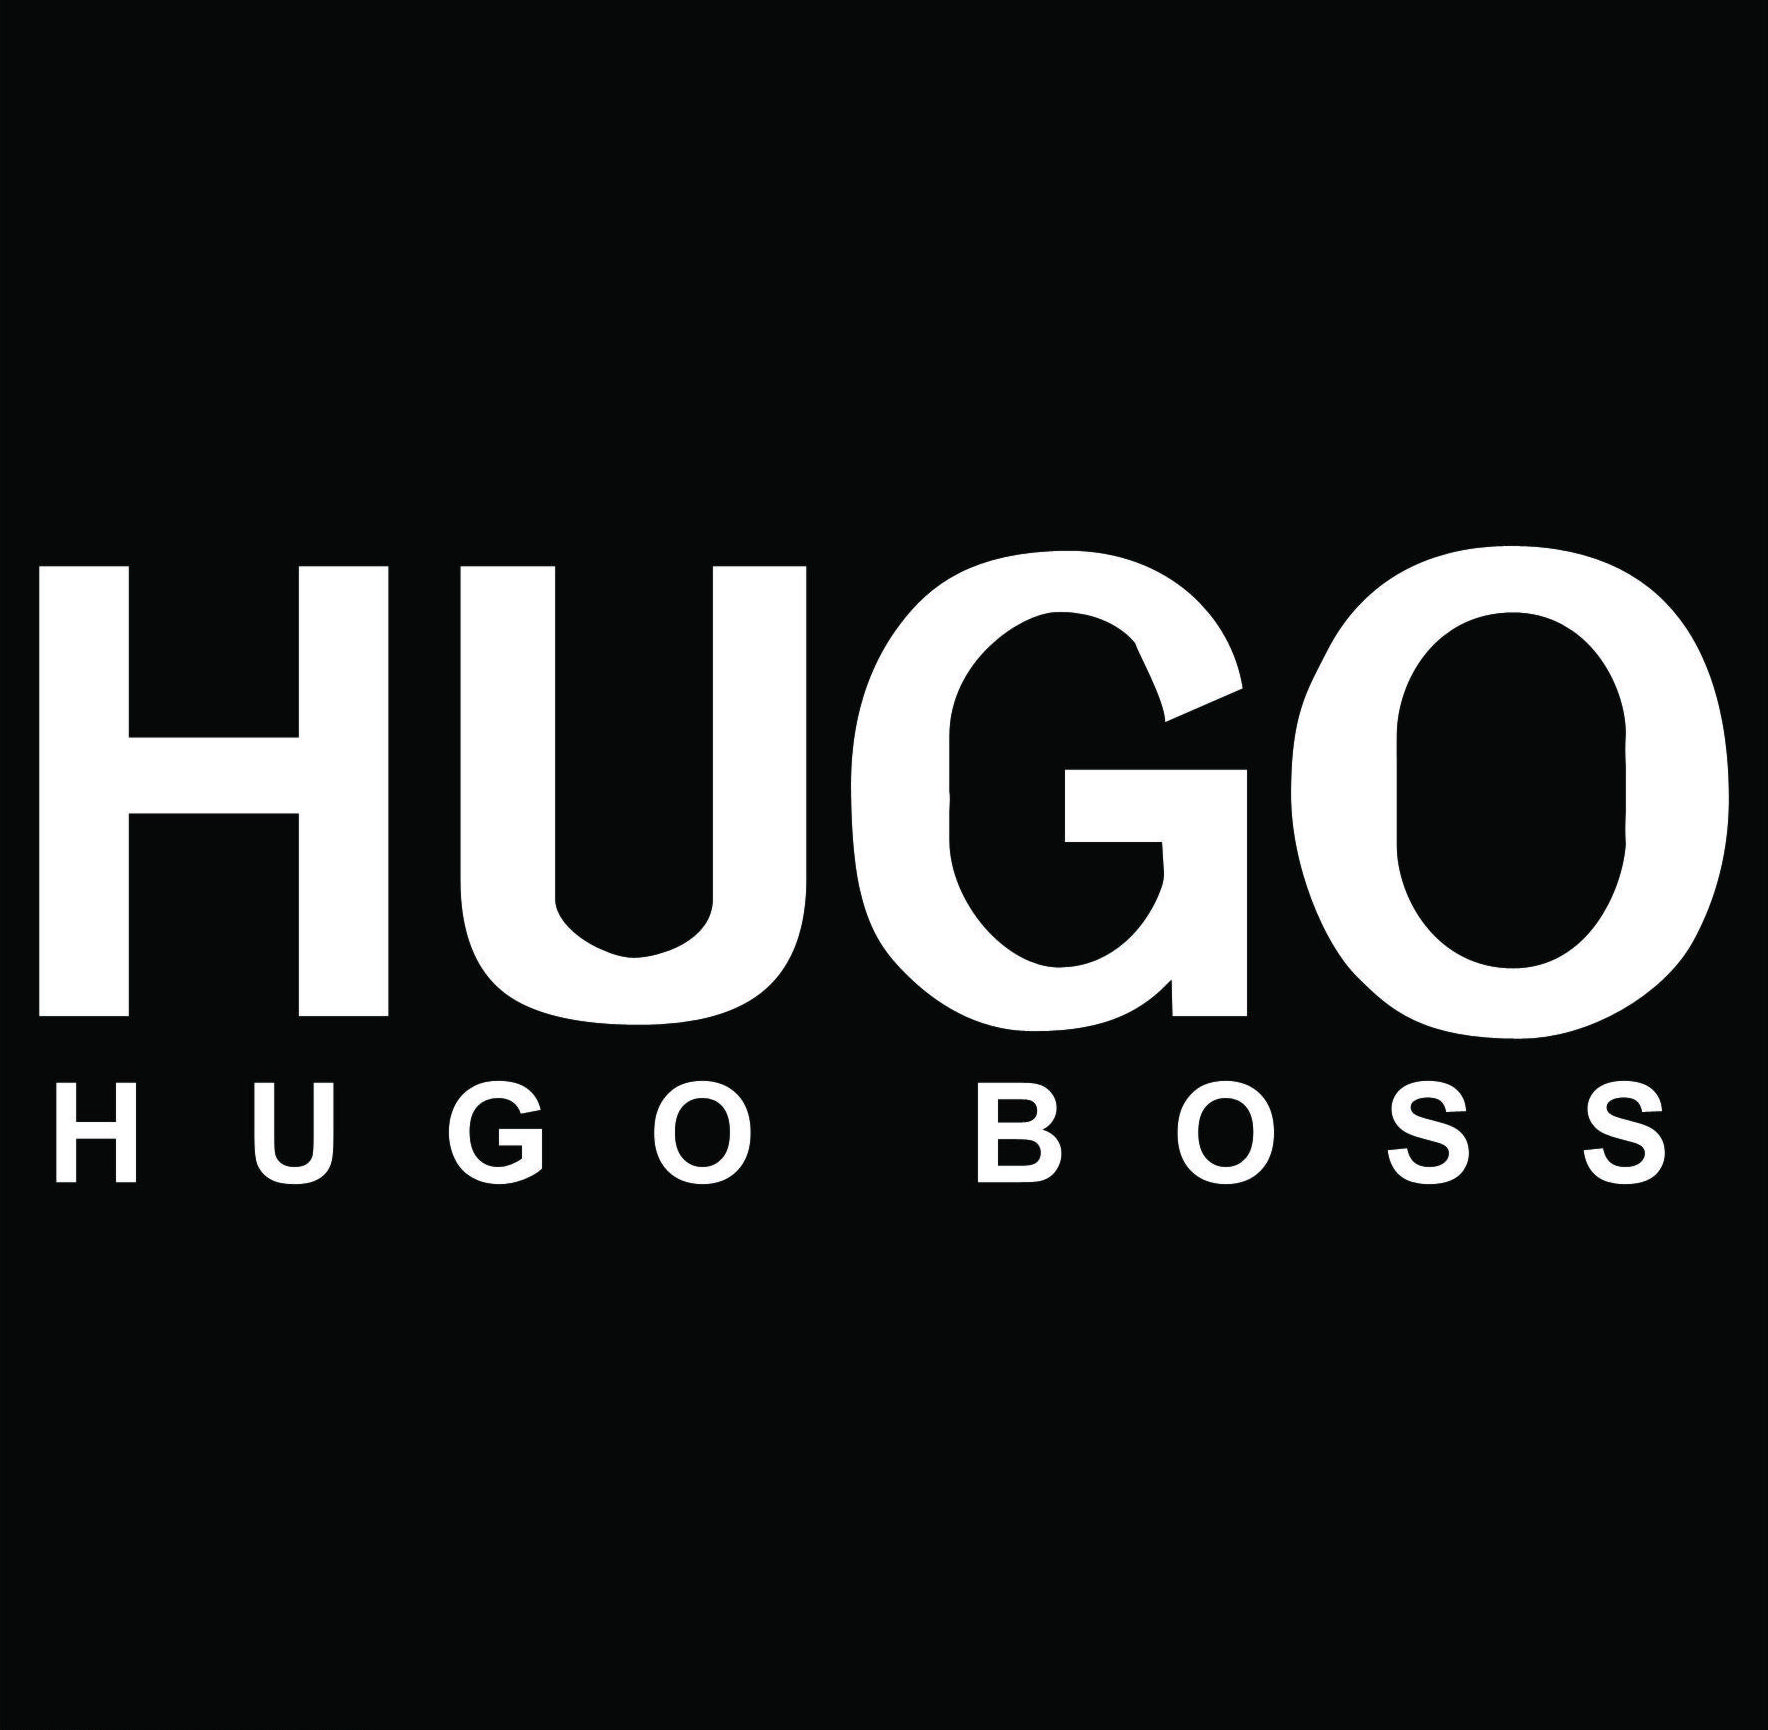 Hugo Boss Wallpapers Top Free Hugo Boss Backgrounds WallpaperAccess ...